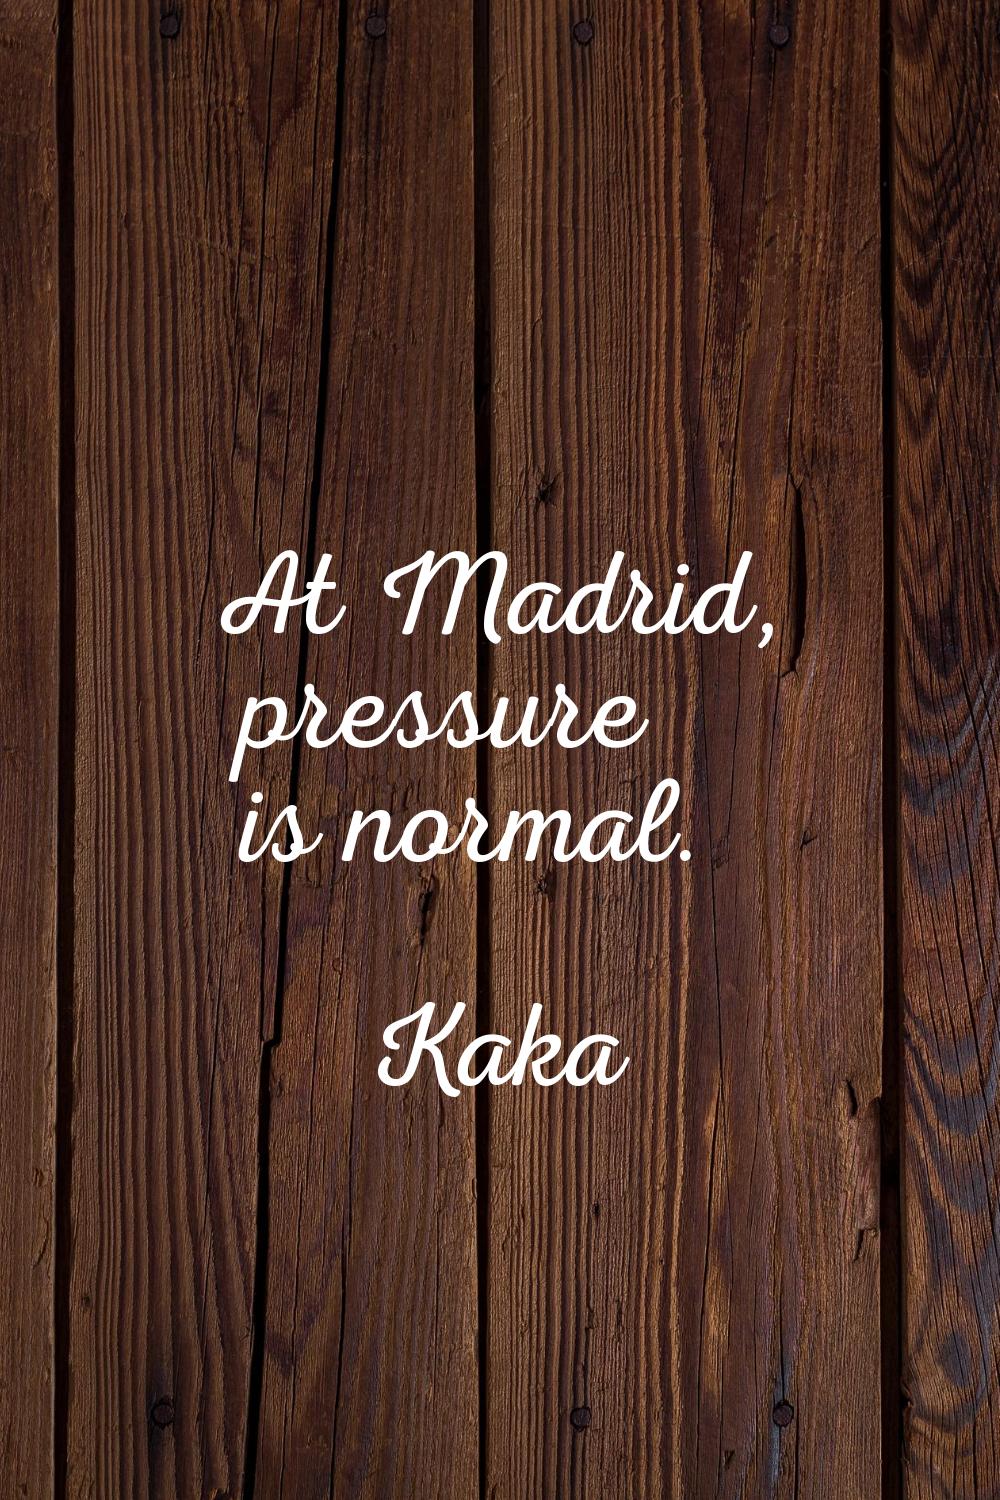 At Madrid, pressure is normal.